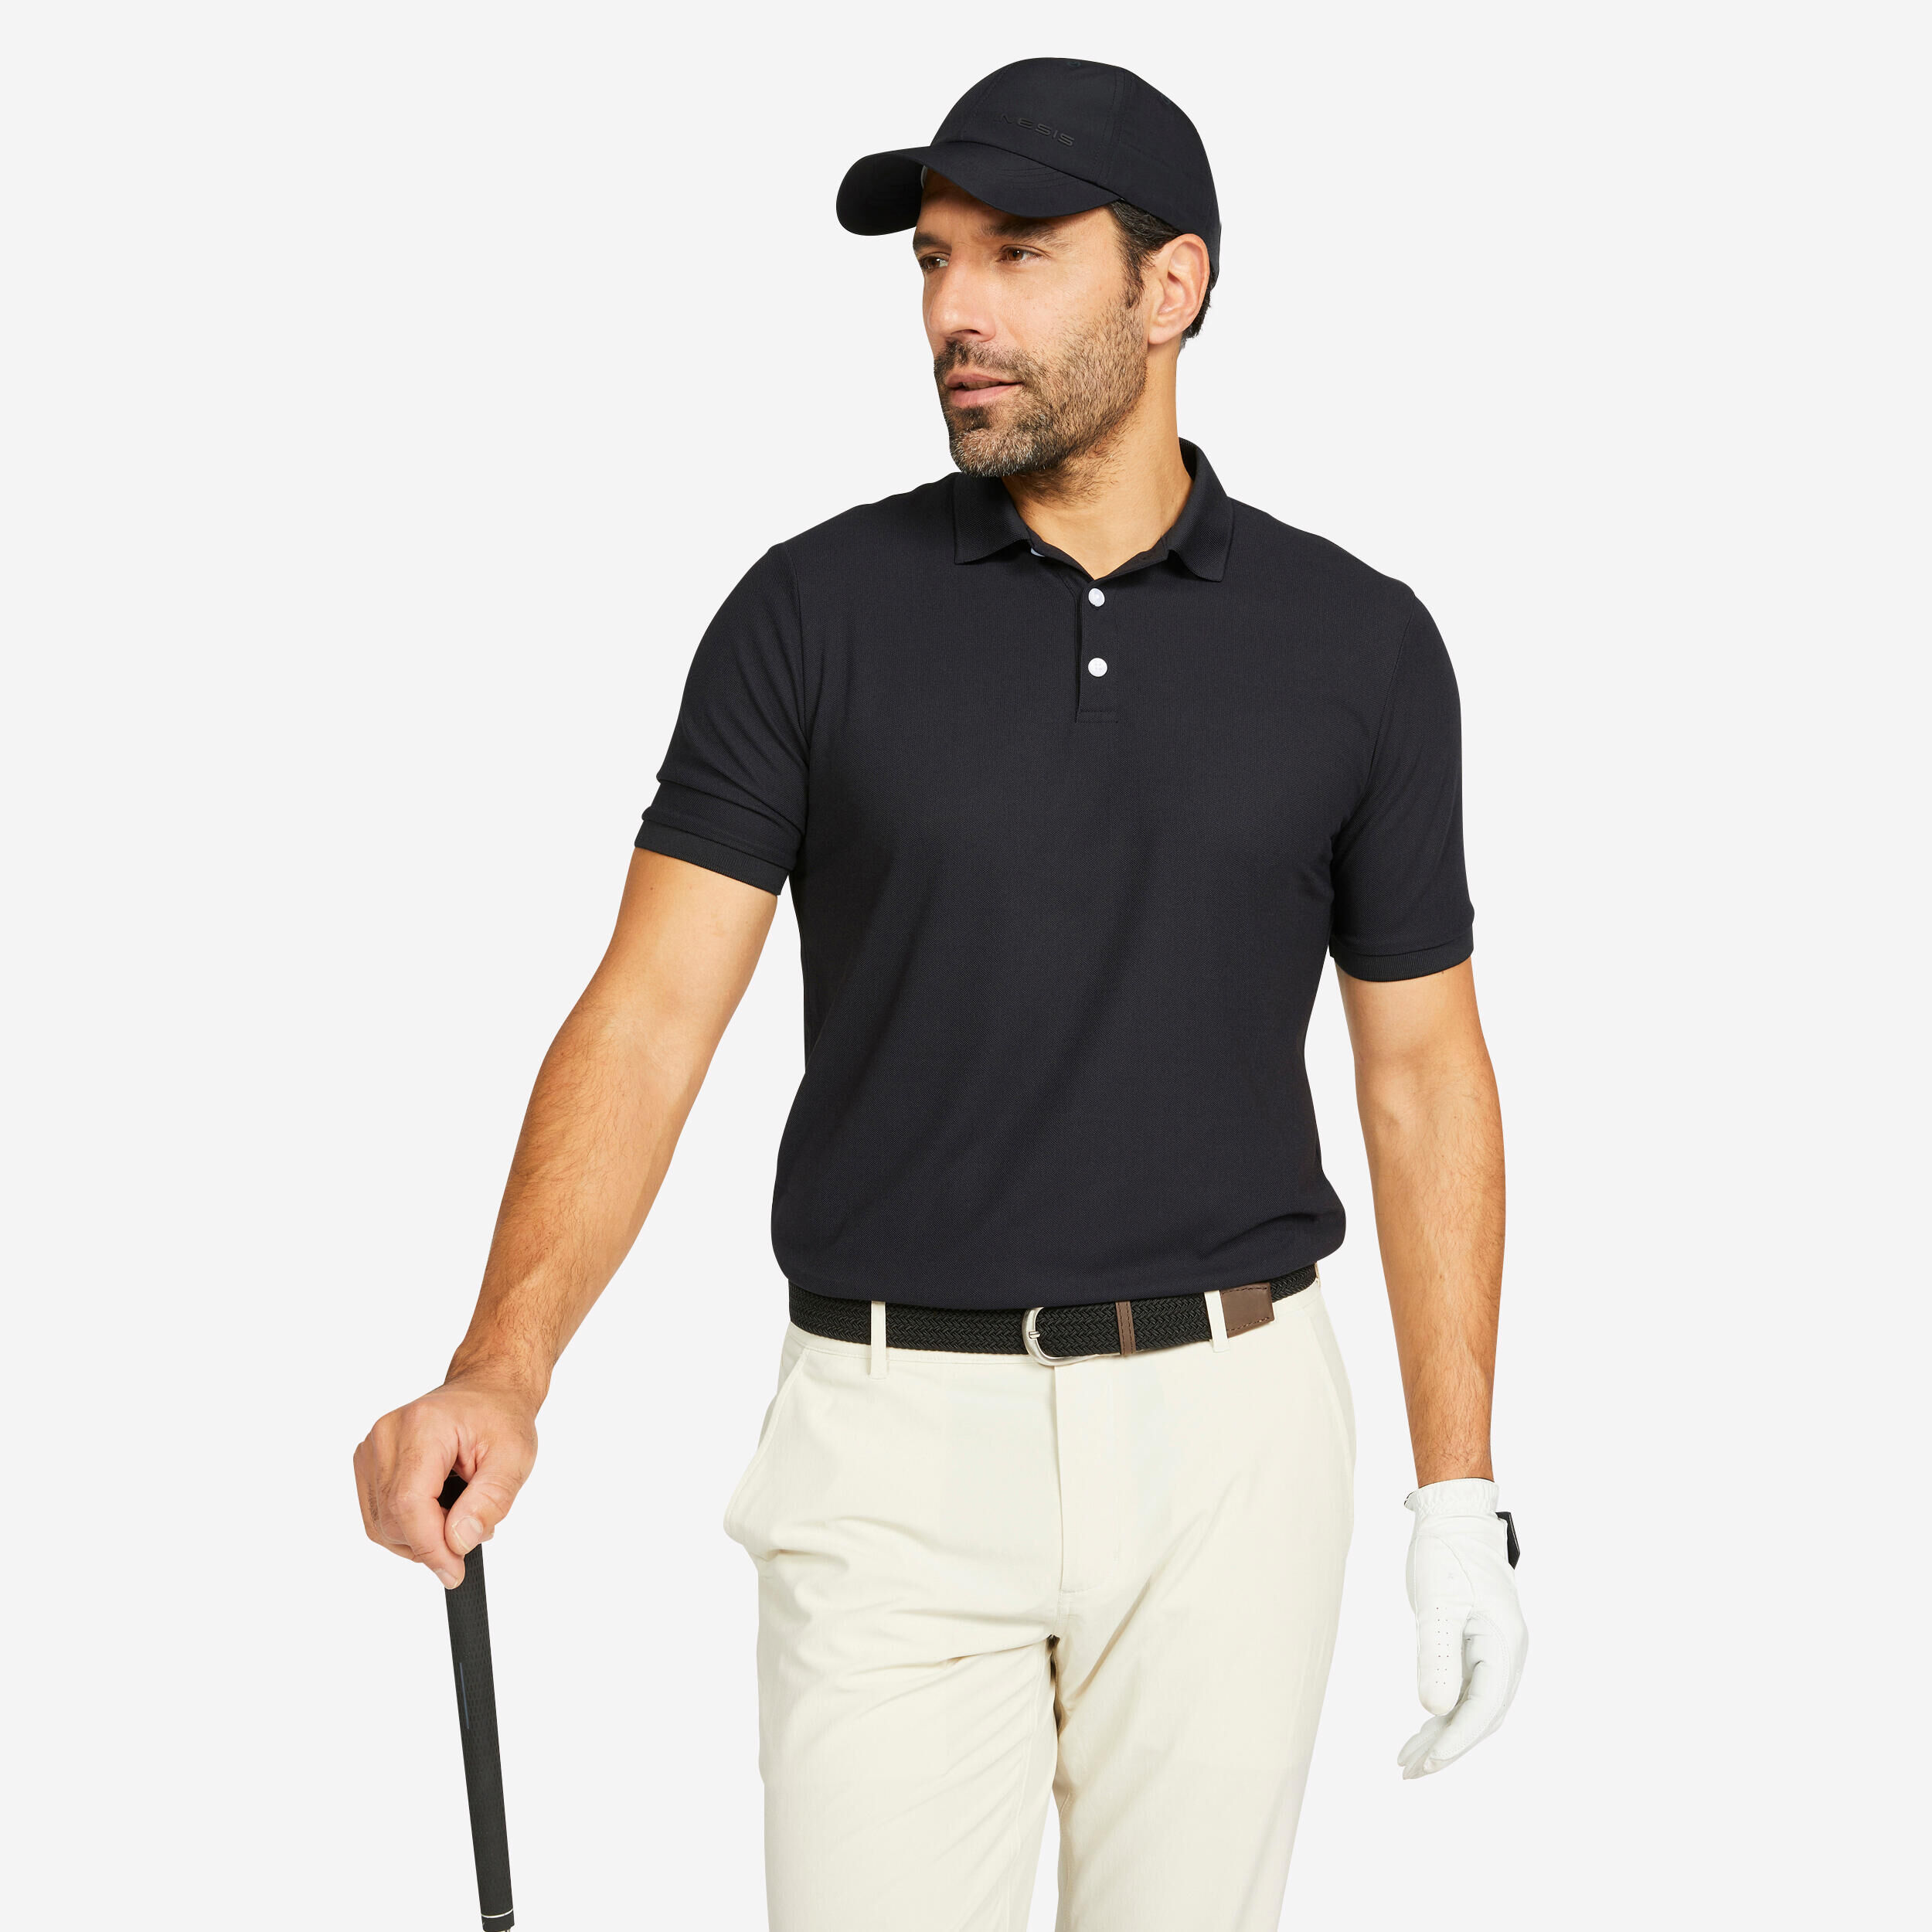 INESIS Men's golf short-sleeved polo shirt - WW500 black